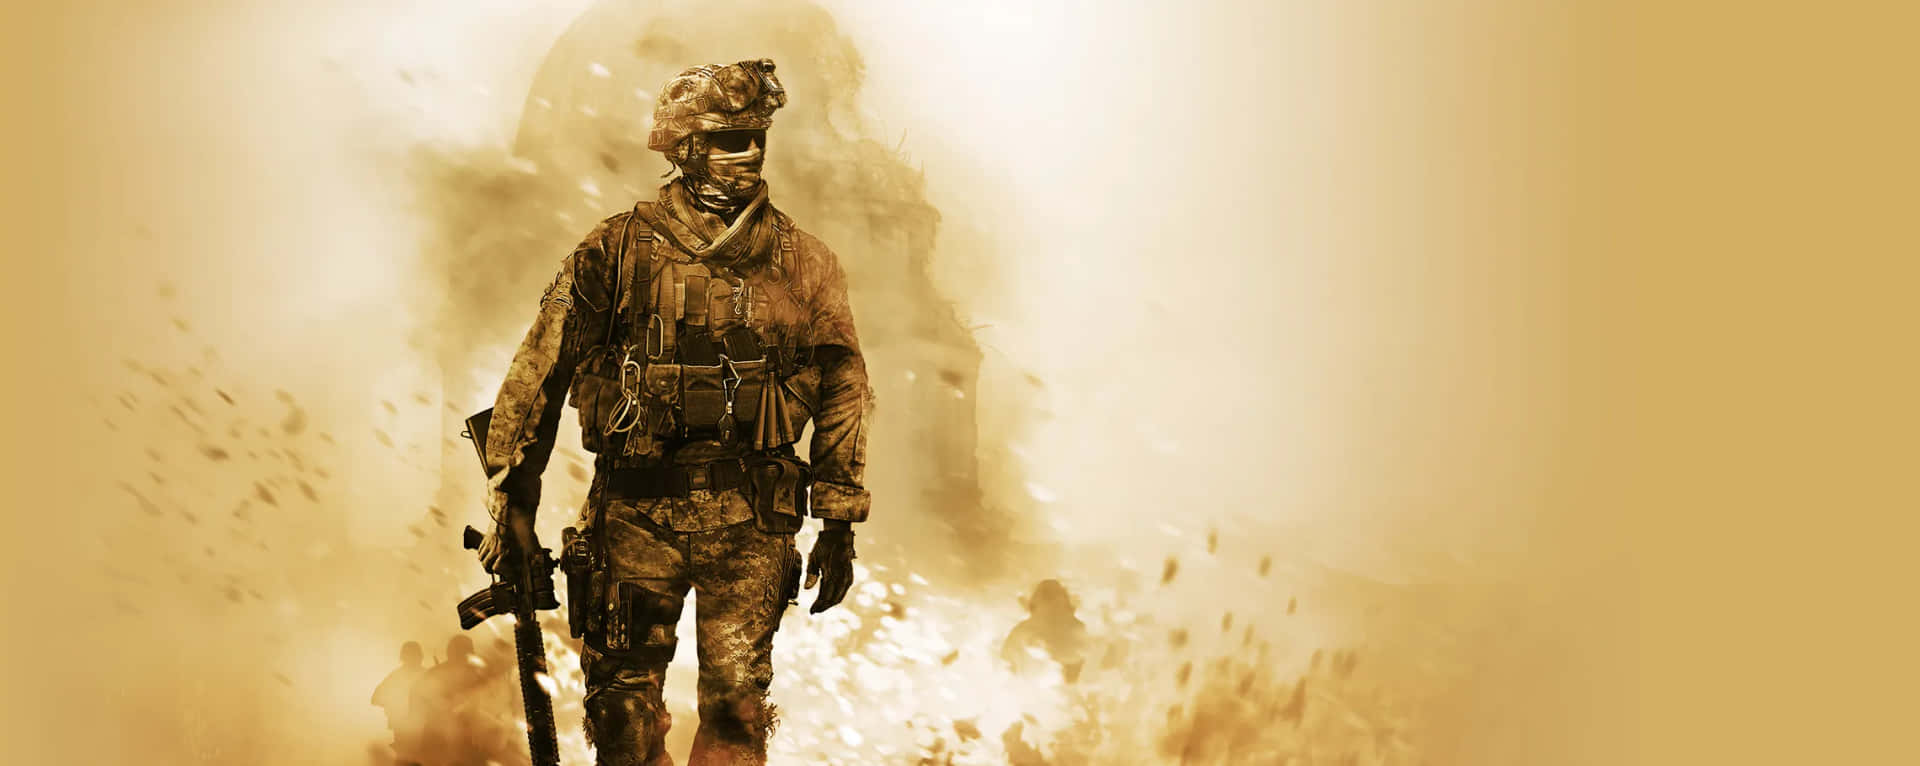 Upplevdin Krigszon I Call Of Duty Modern Warfare På Din Dator Eller Mobiltelefon Bakgrundsbild. Wallpaper